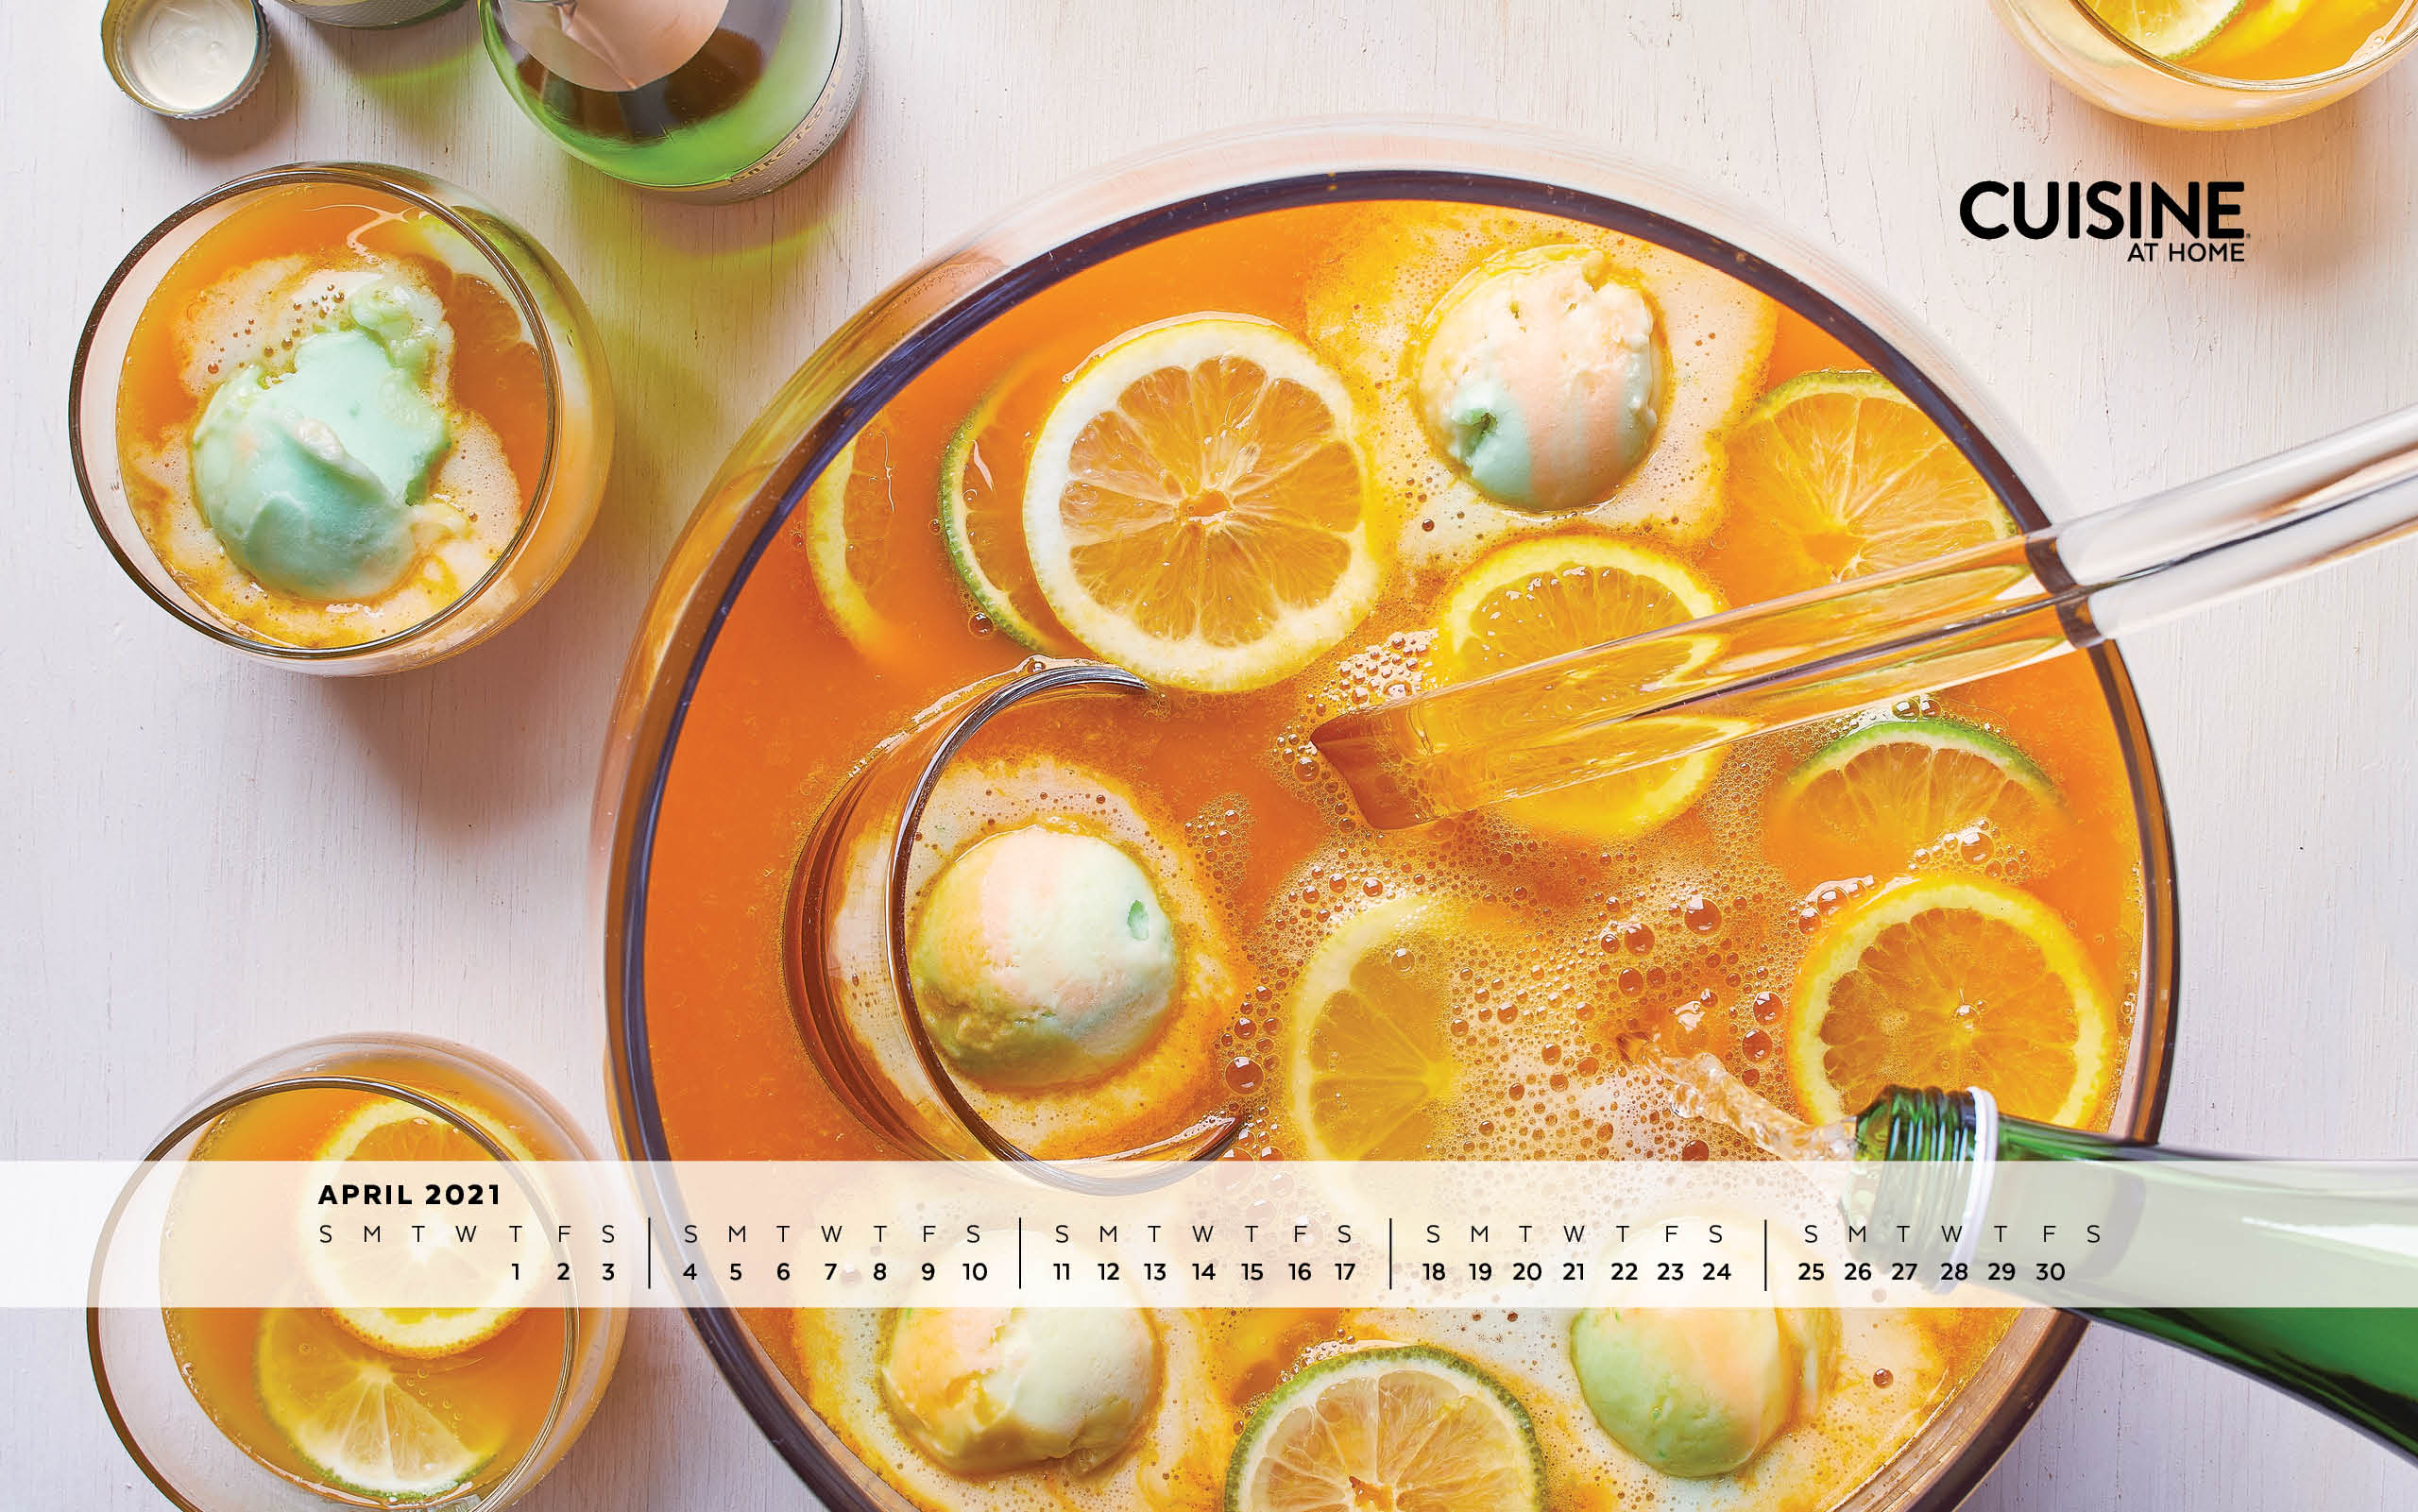 Free Desktop Wallpaper with Calendar - April 2021 - Fizzy Bunny sherbet orange punch bowl